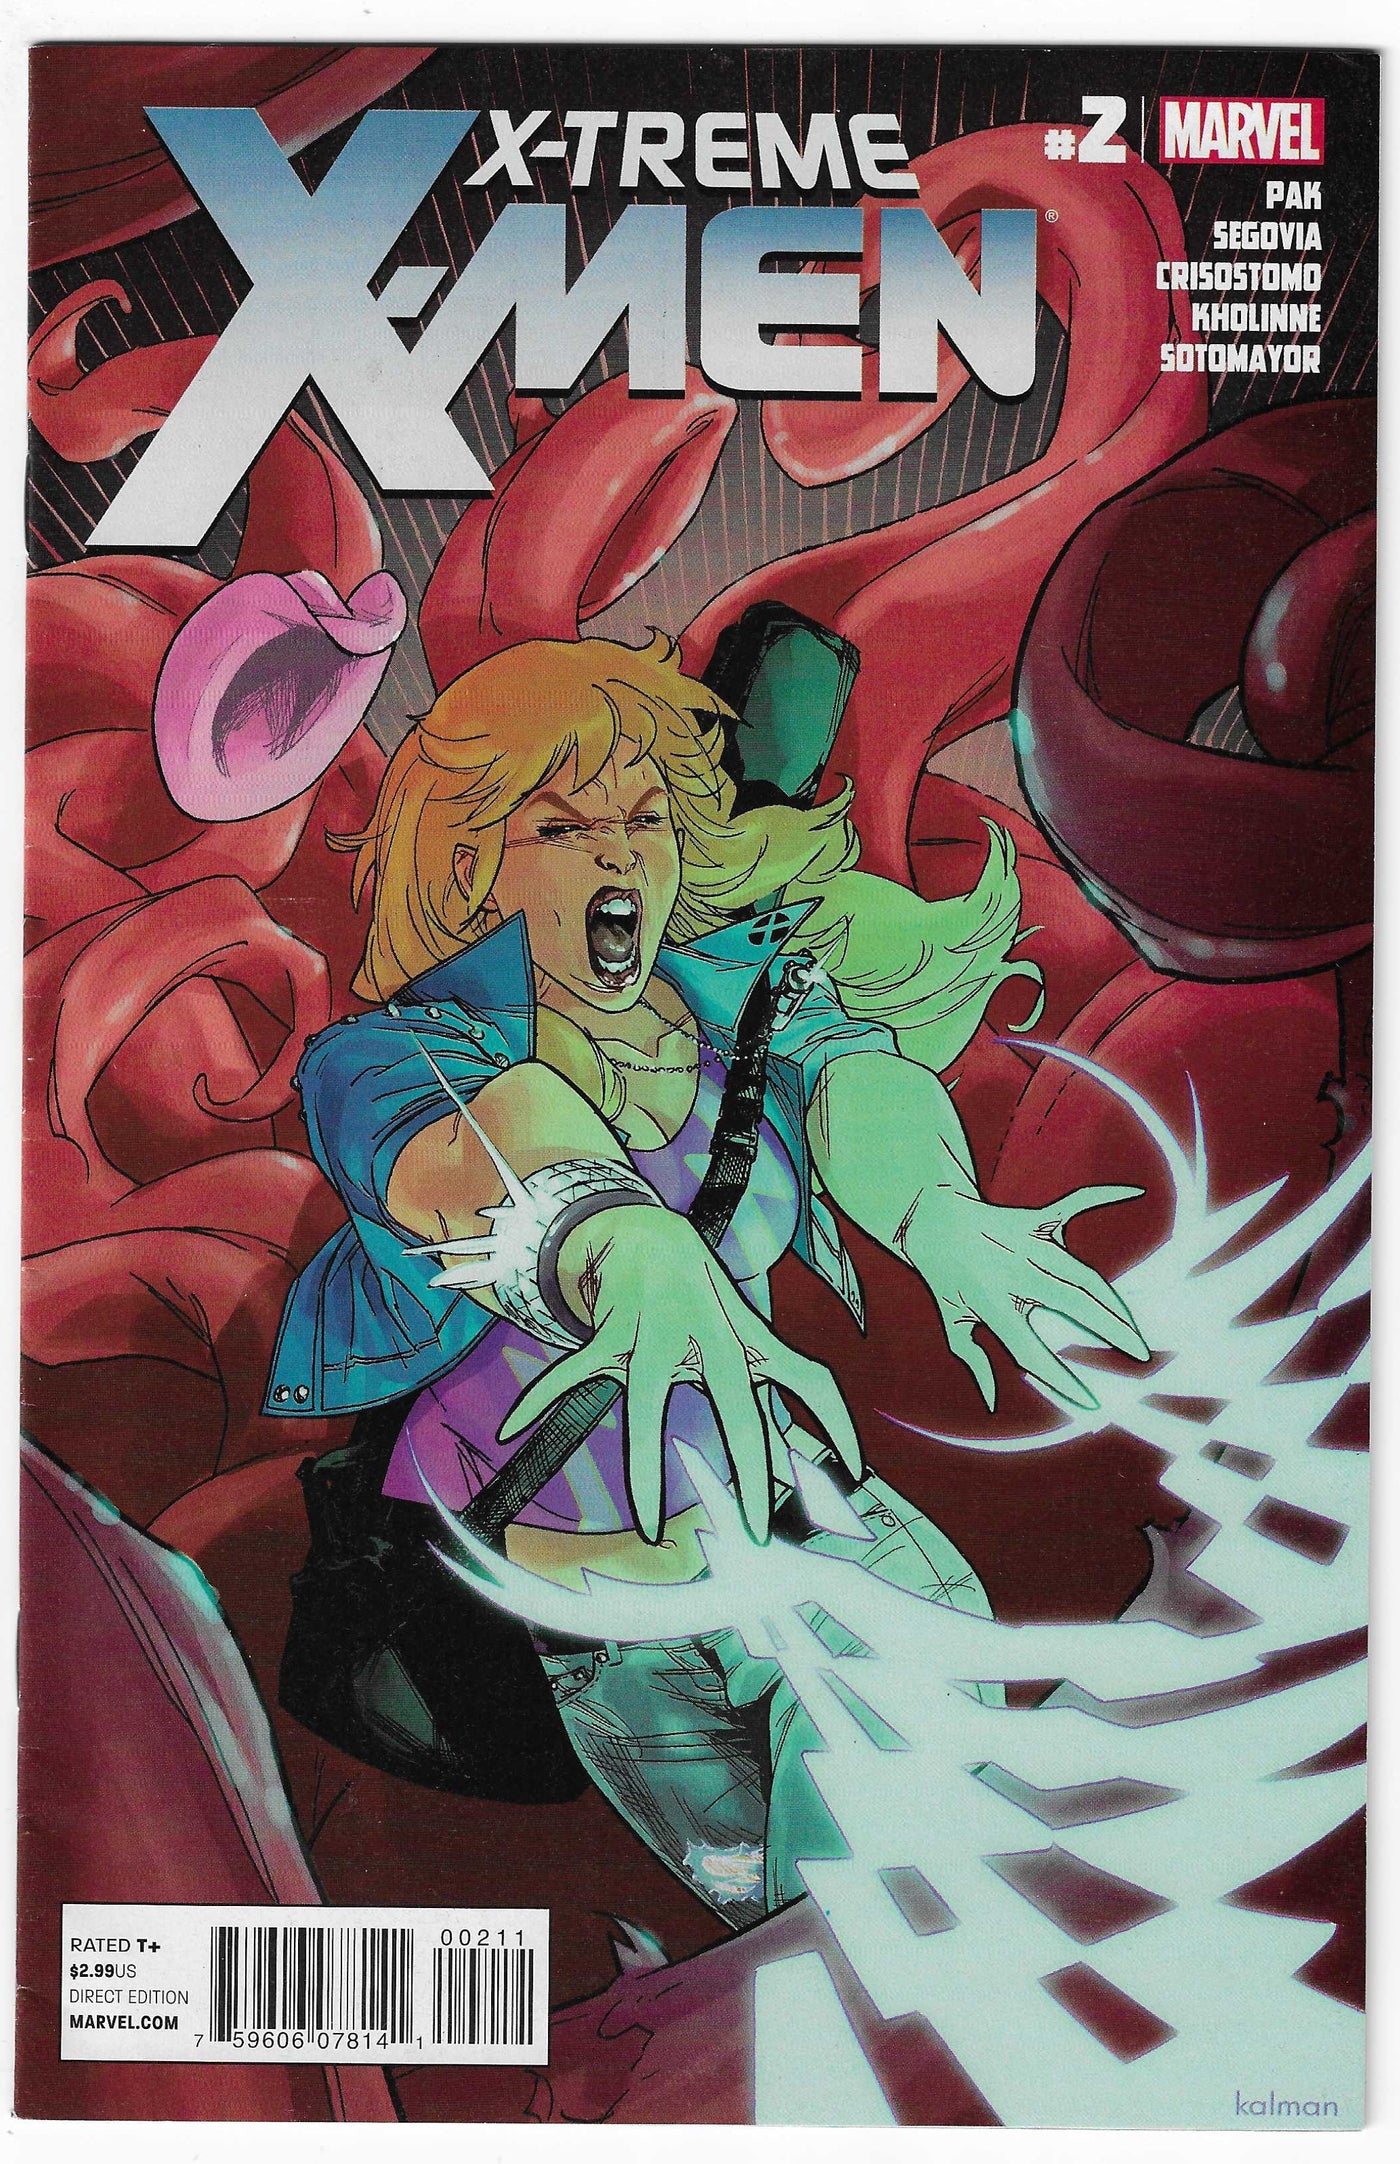 X-Treme X-Men (Volume 2) #2